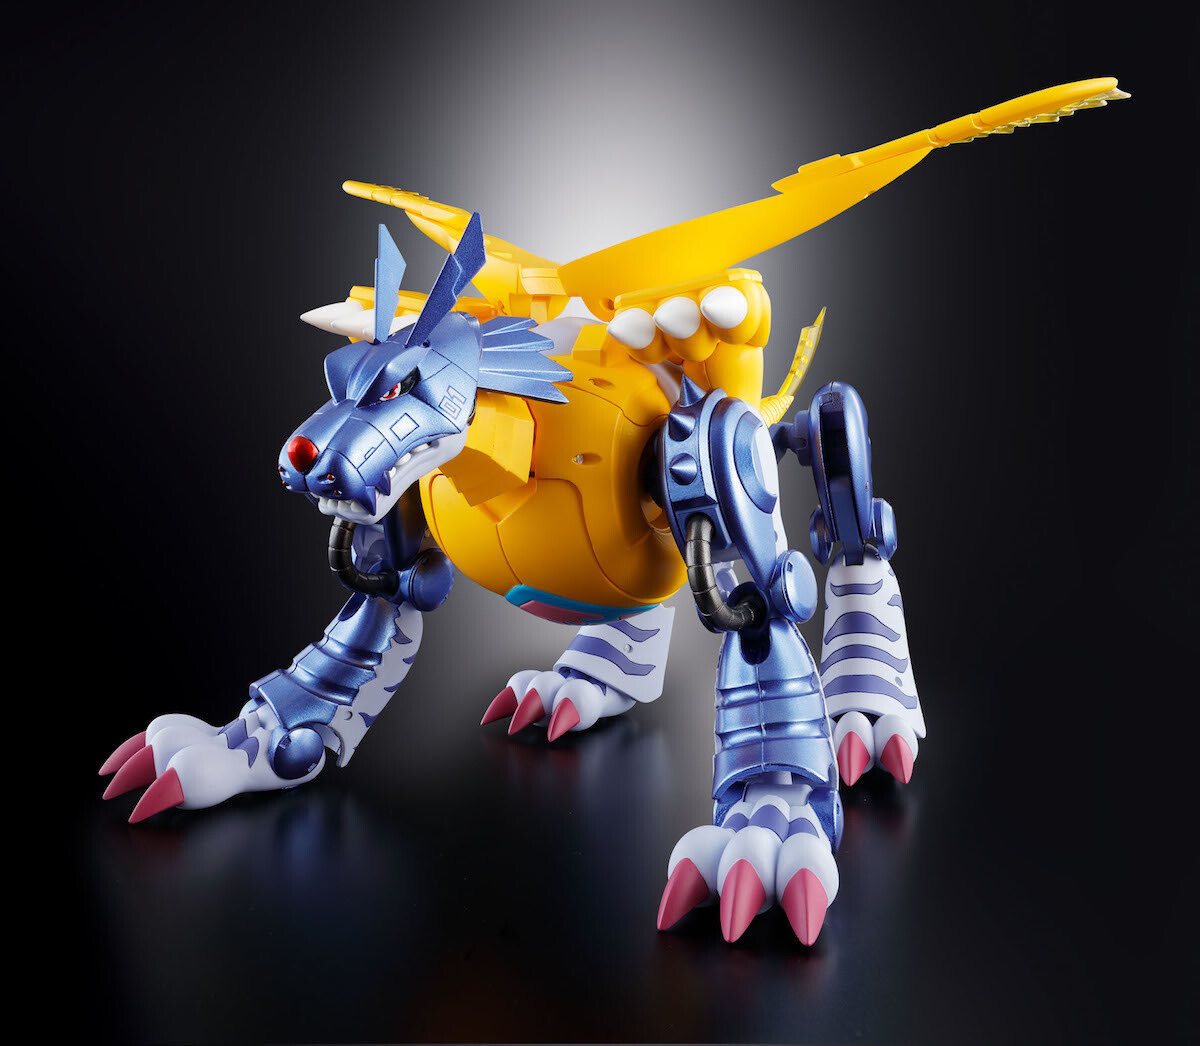 Boneco Digimon, Metal-garurumon Original Bandai Digivolving